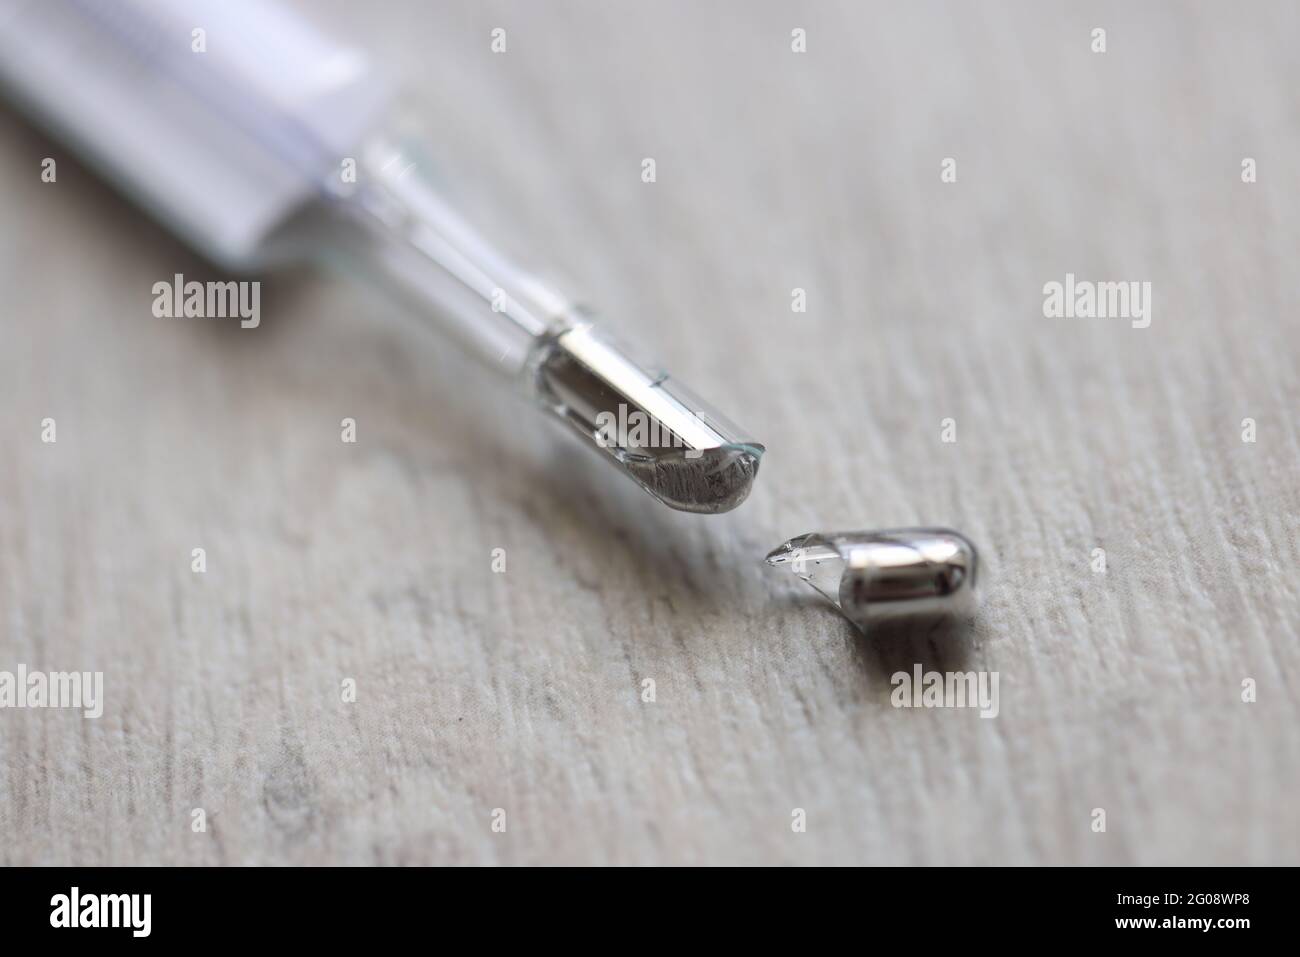 Termometro de mercurio rotura fotografías e imágenes de alta resolución -  Alamy